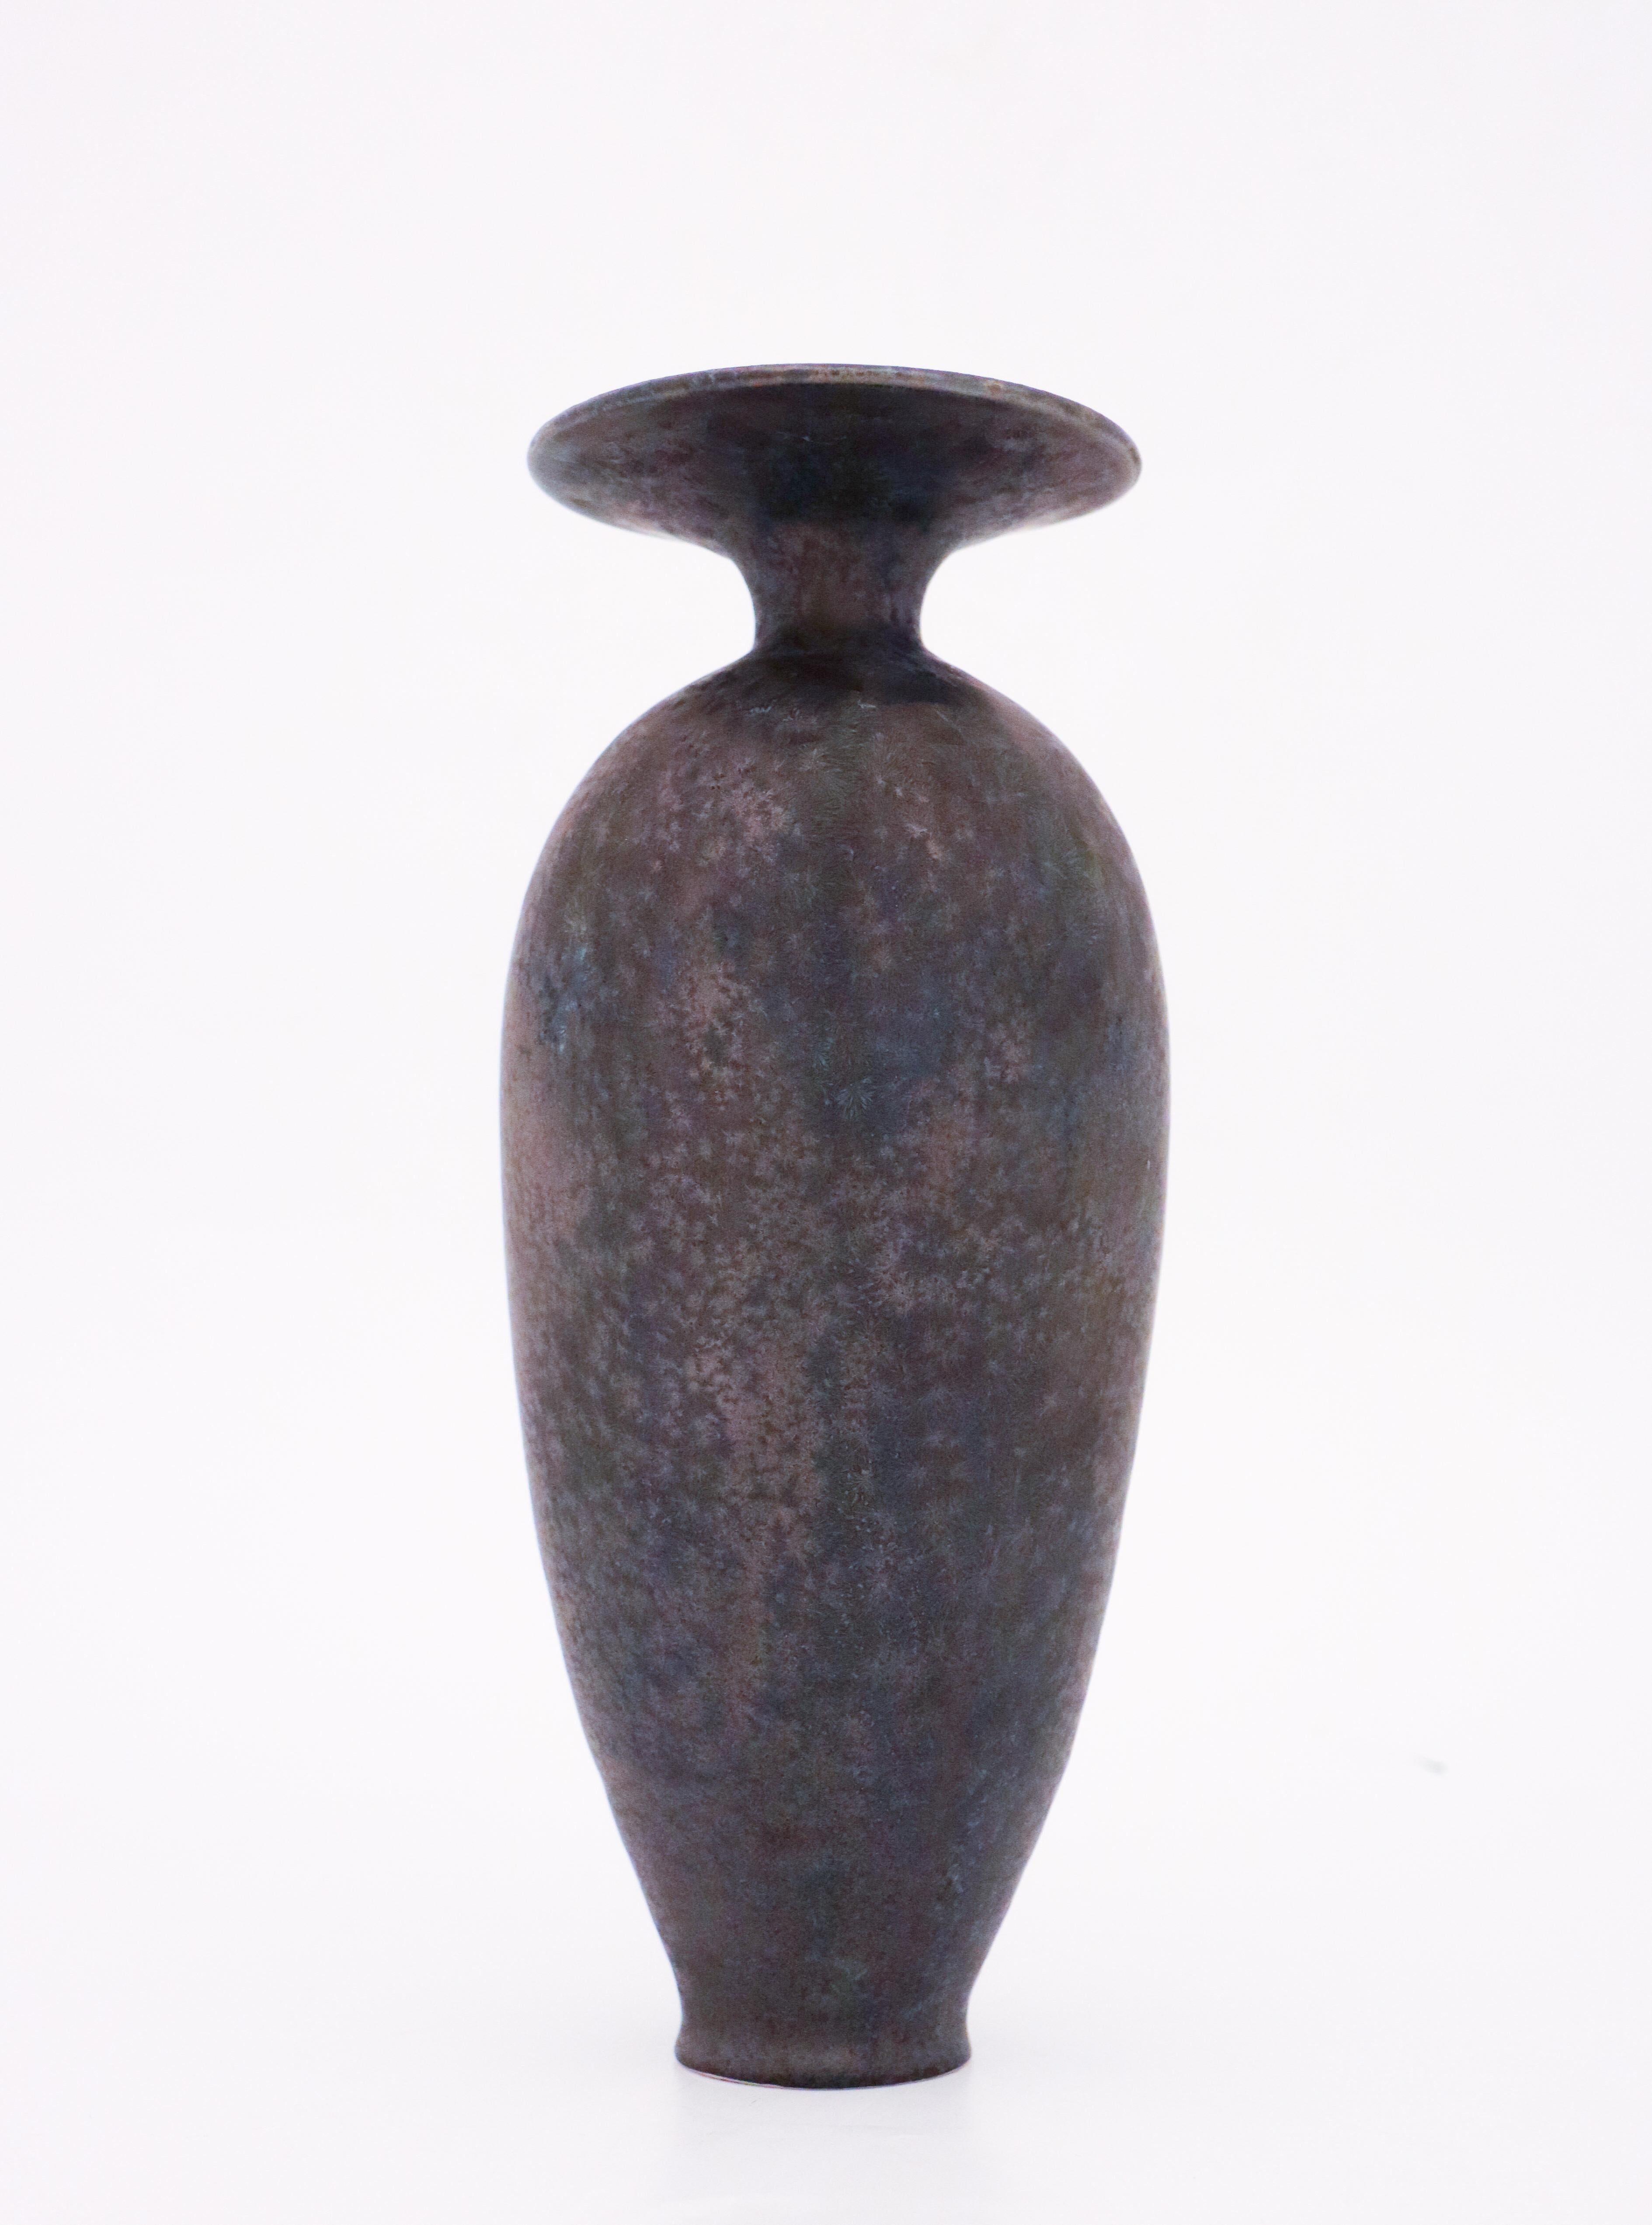 Glazed Black Ceramic Vase by Isak Isaksson, Contemporary Swedish Ceramicist